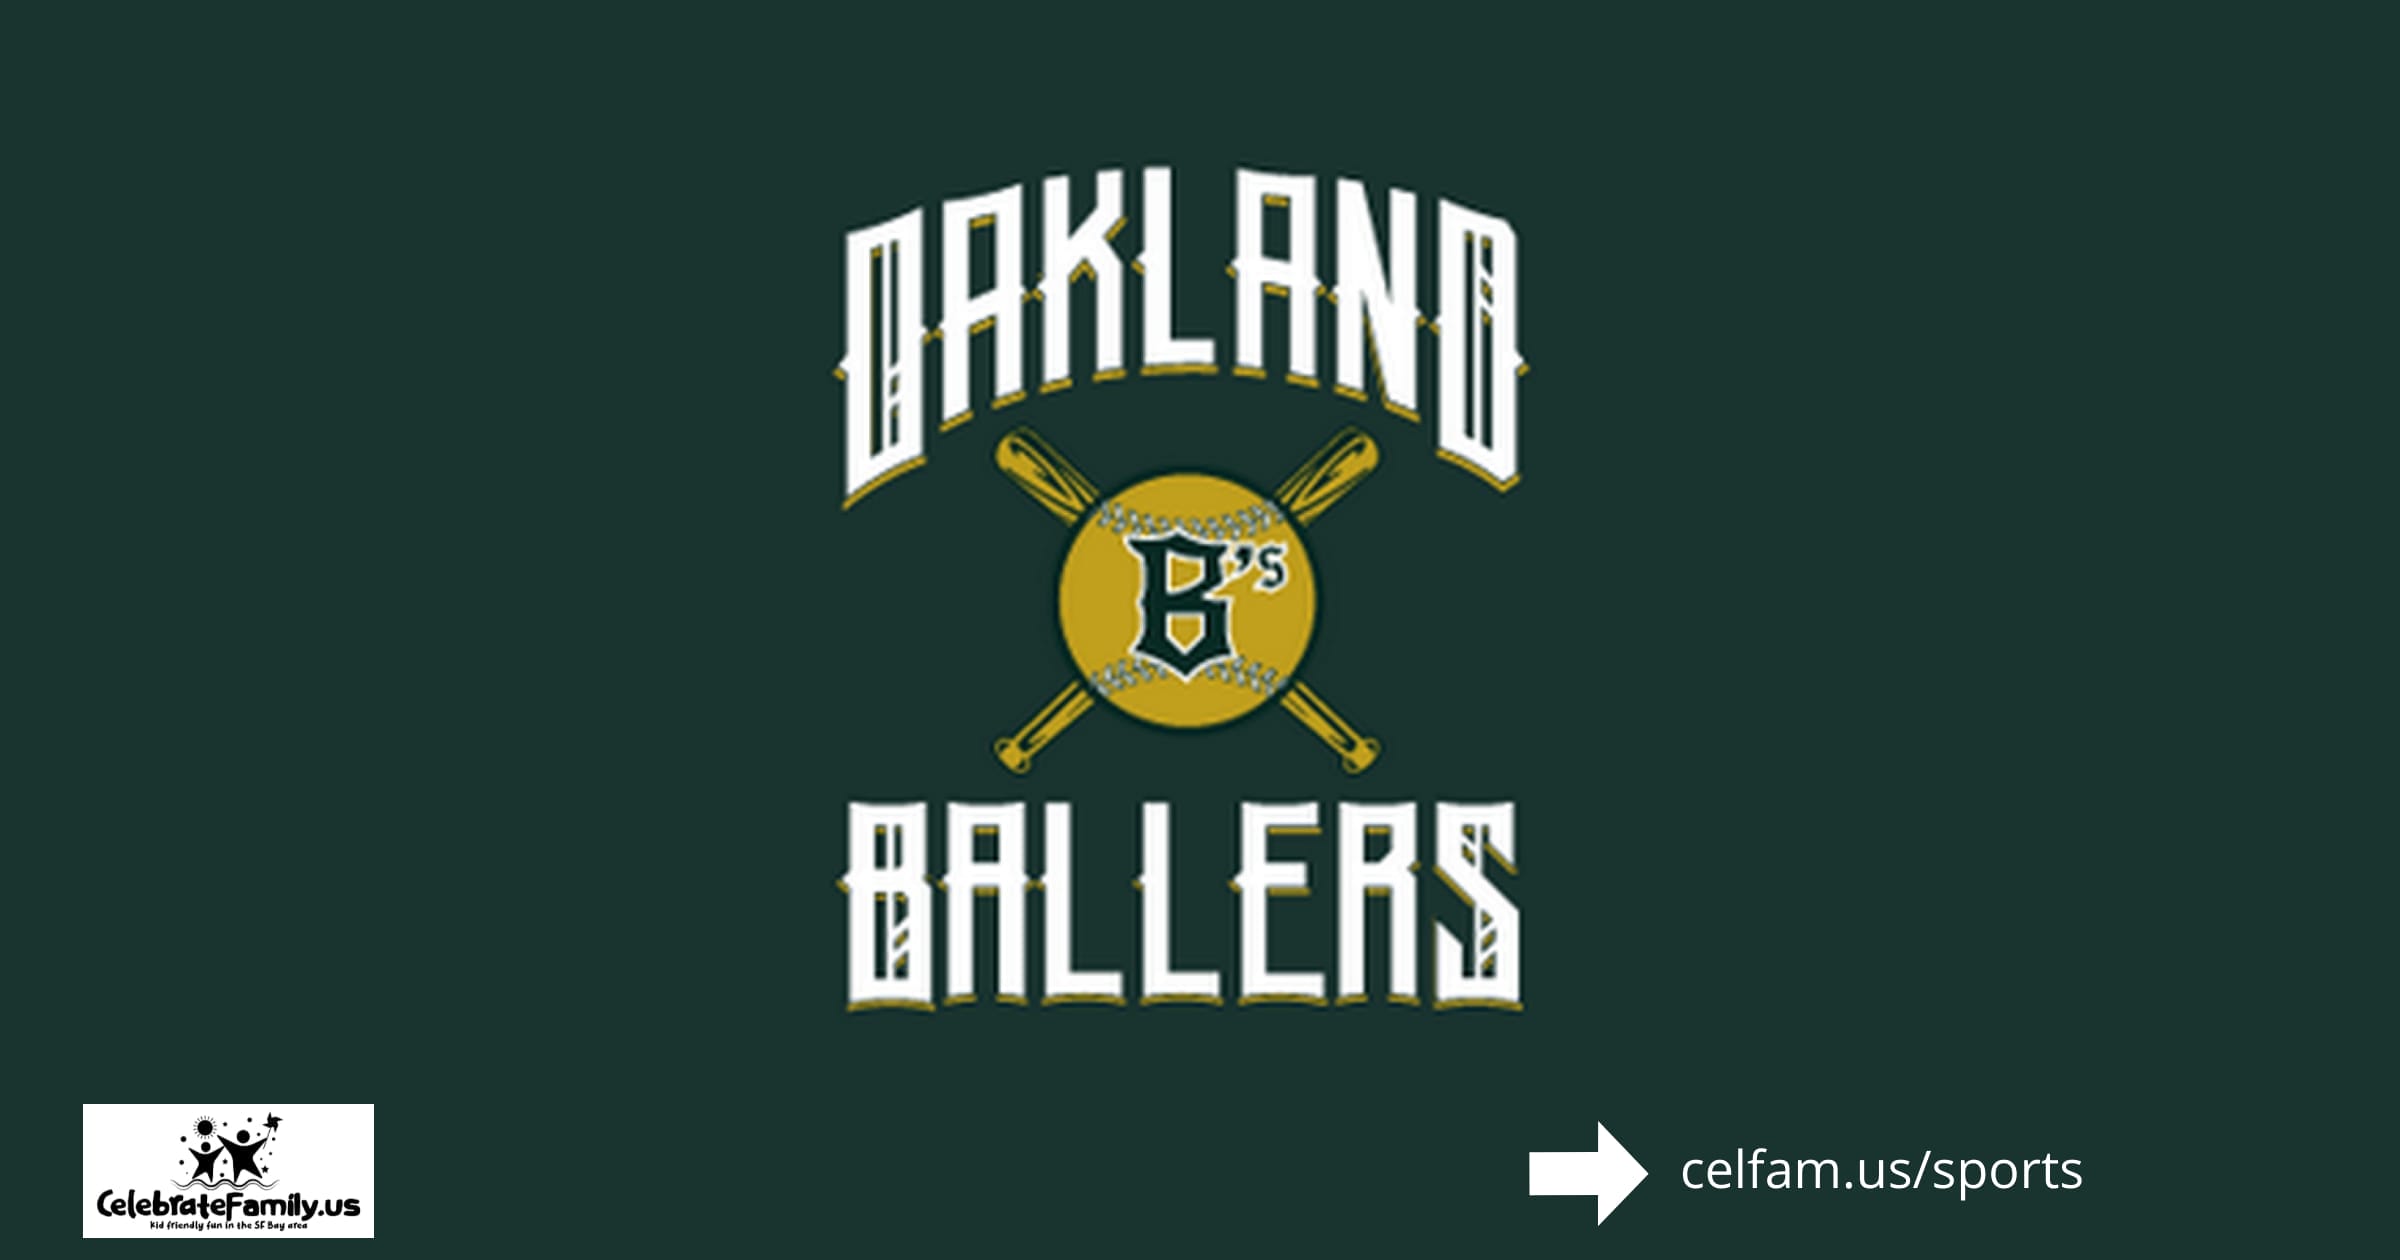 Oakland Ballers baseball